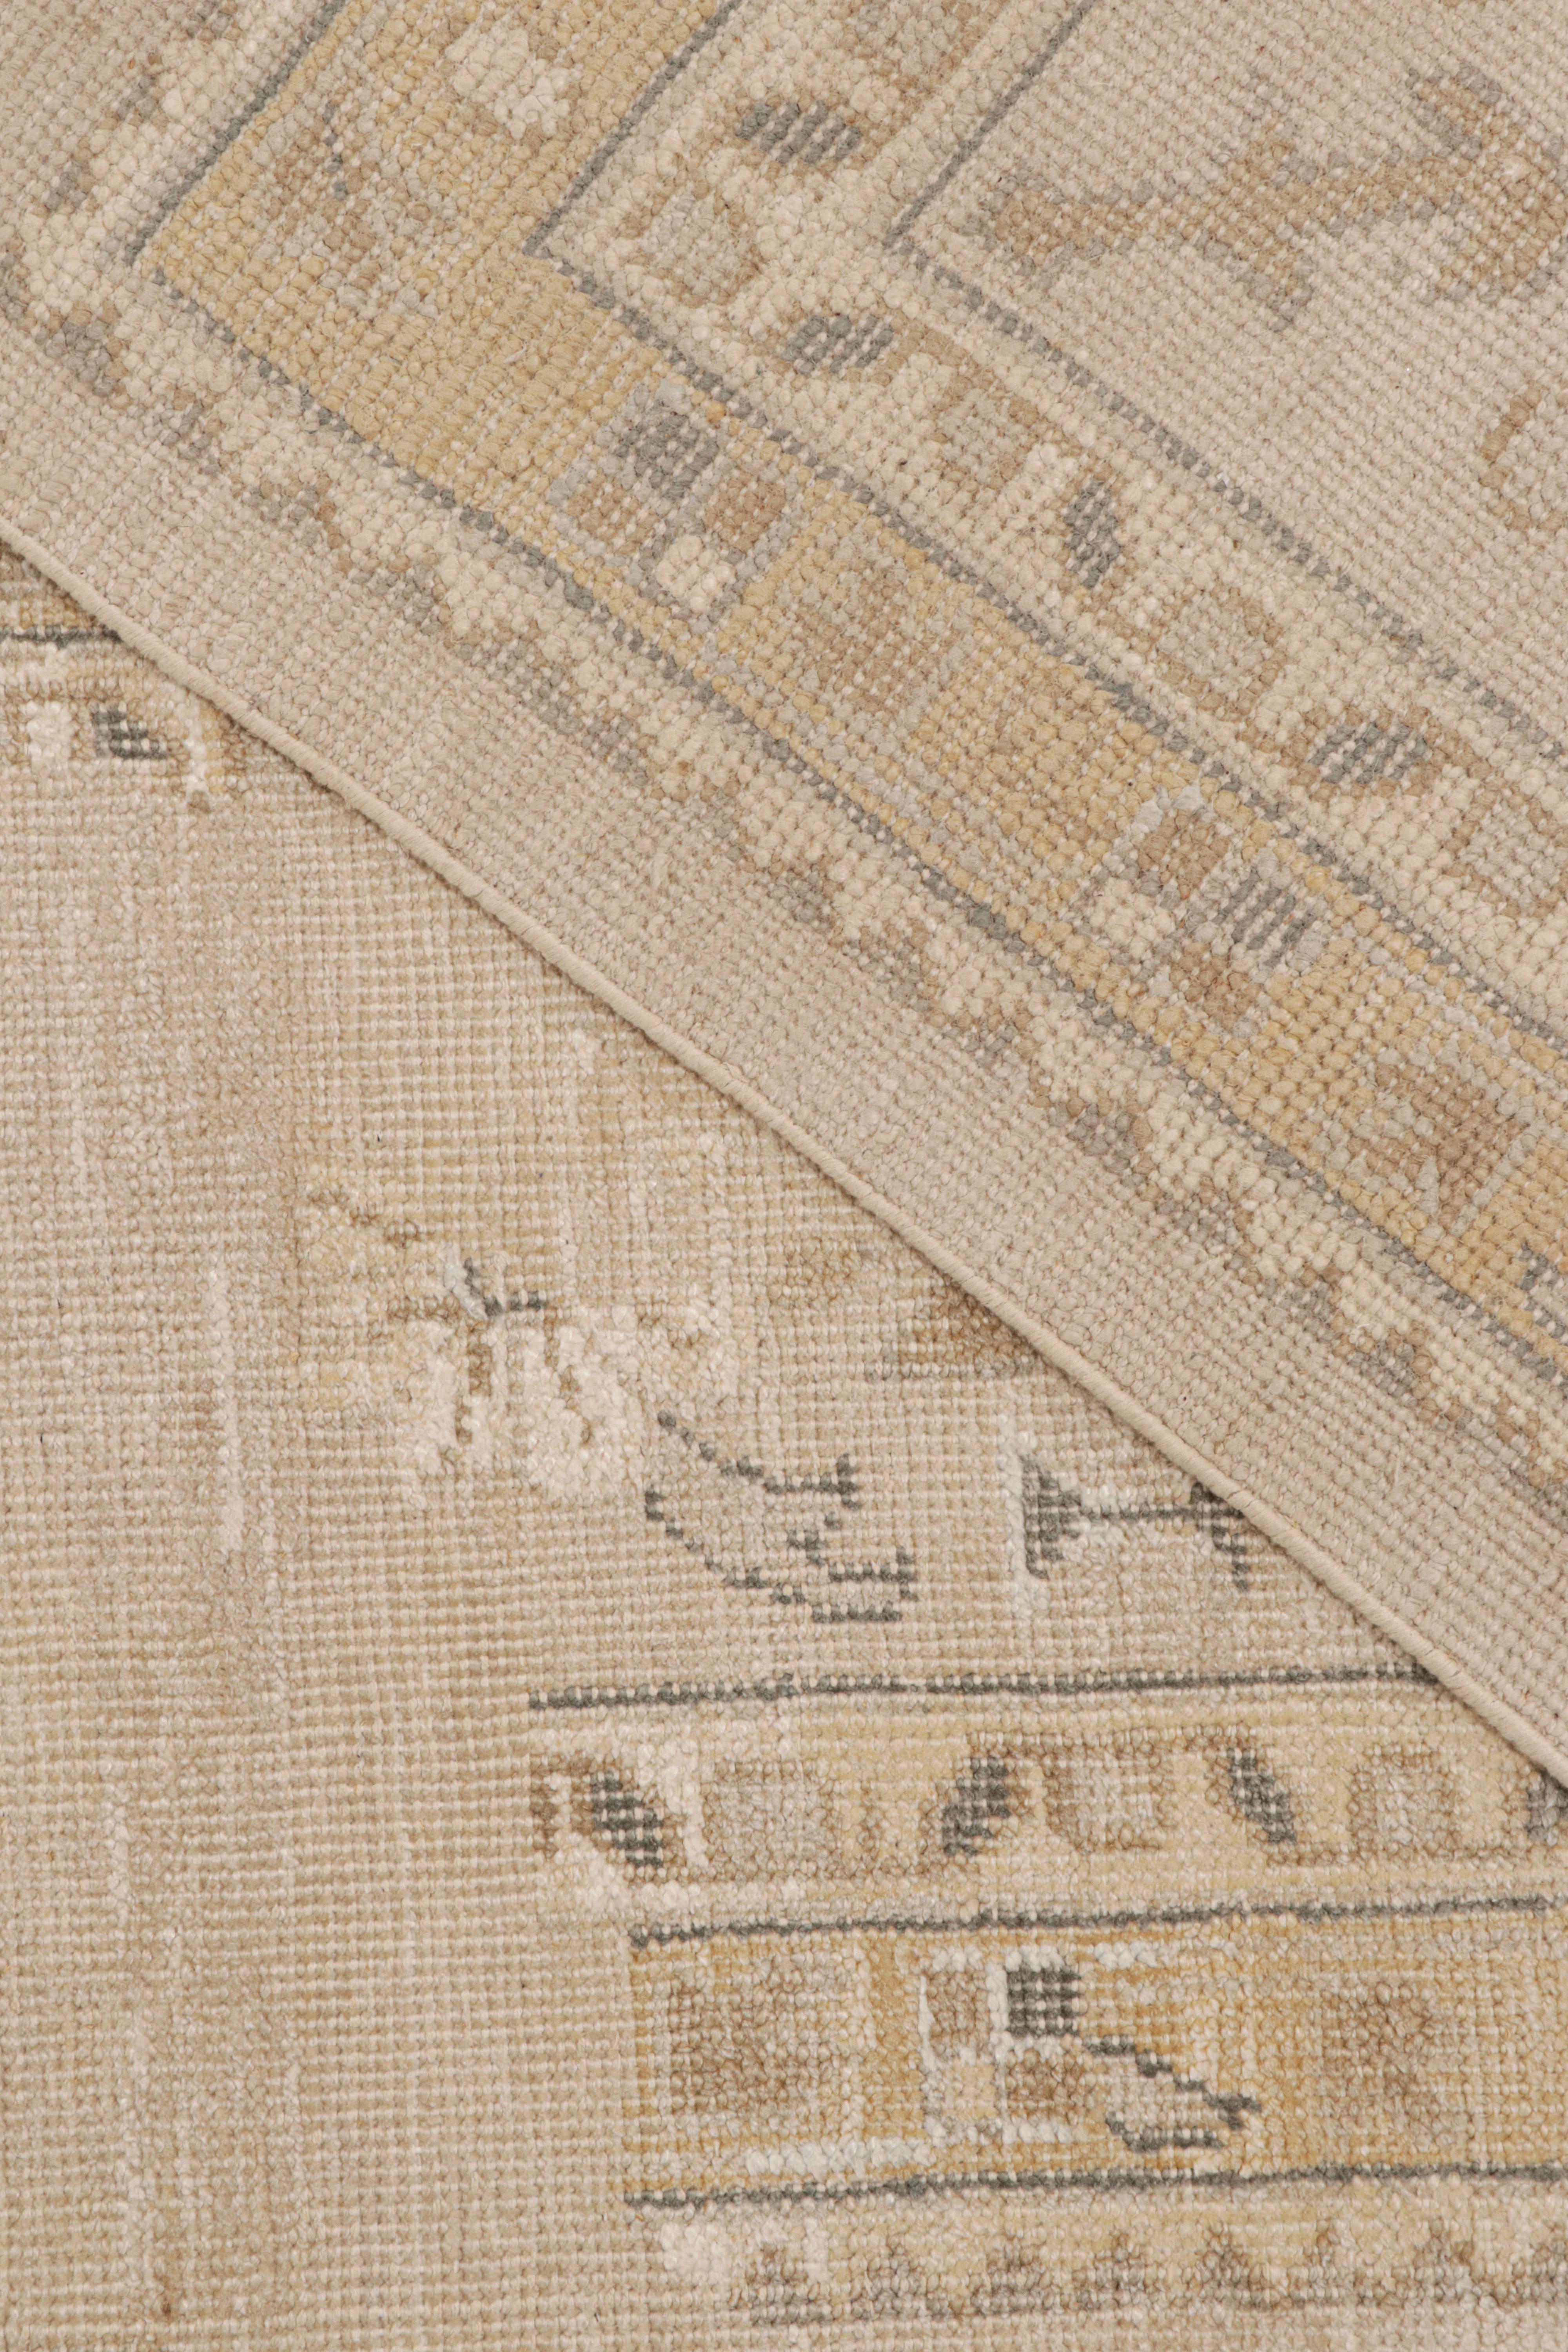 Wool Rug & Kilim’s Oushak Style Rug in Beige & grey Geometric Patterns For Sale